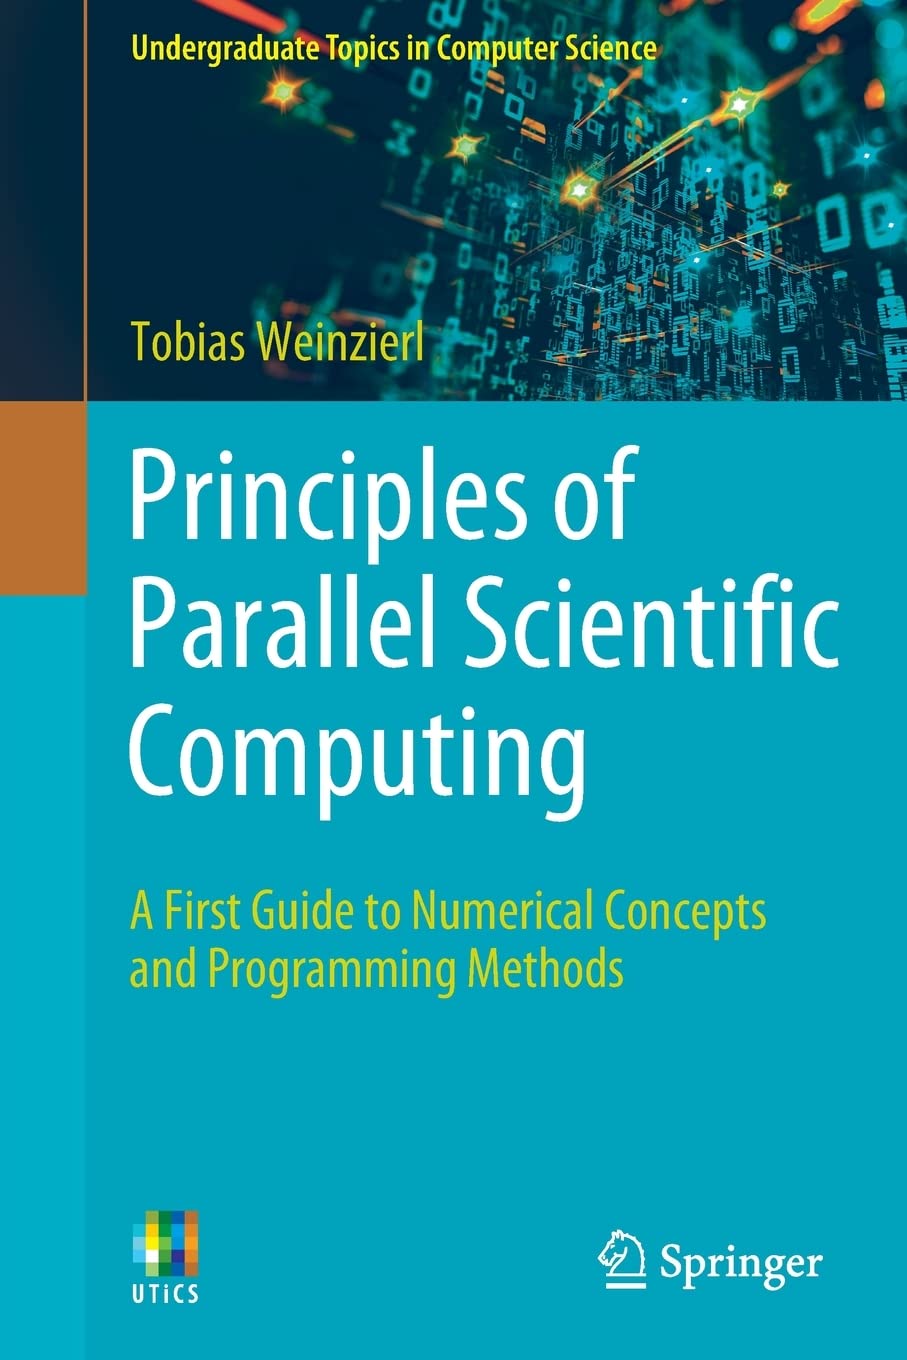 Principles of Parallel Scientific Computing